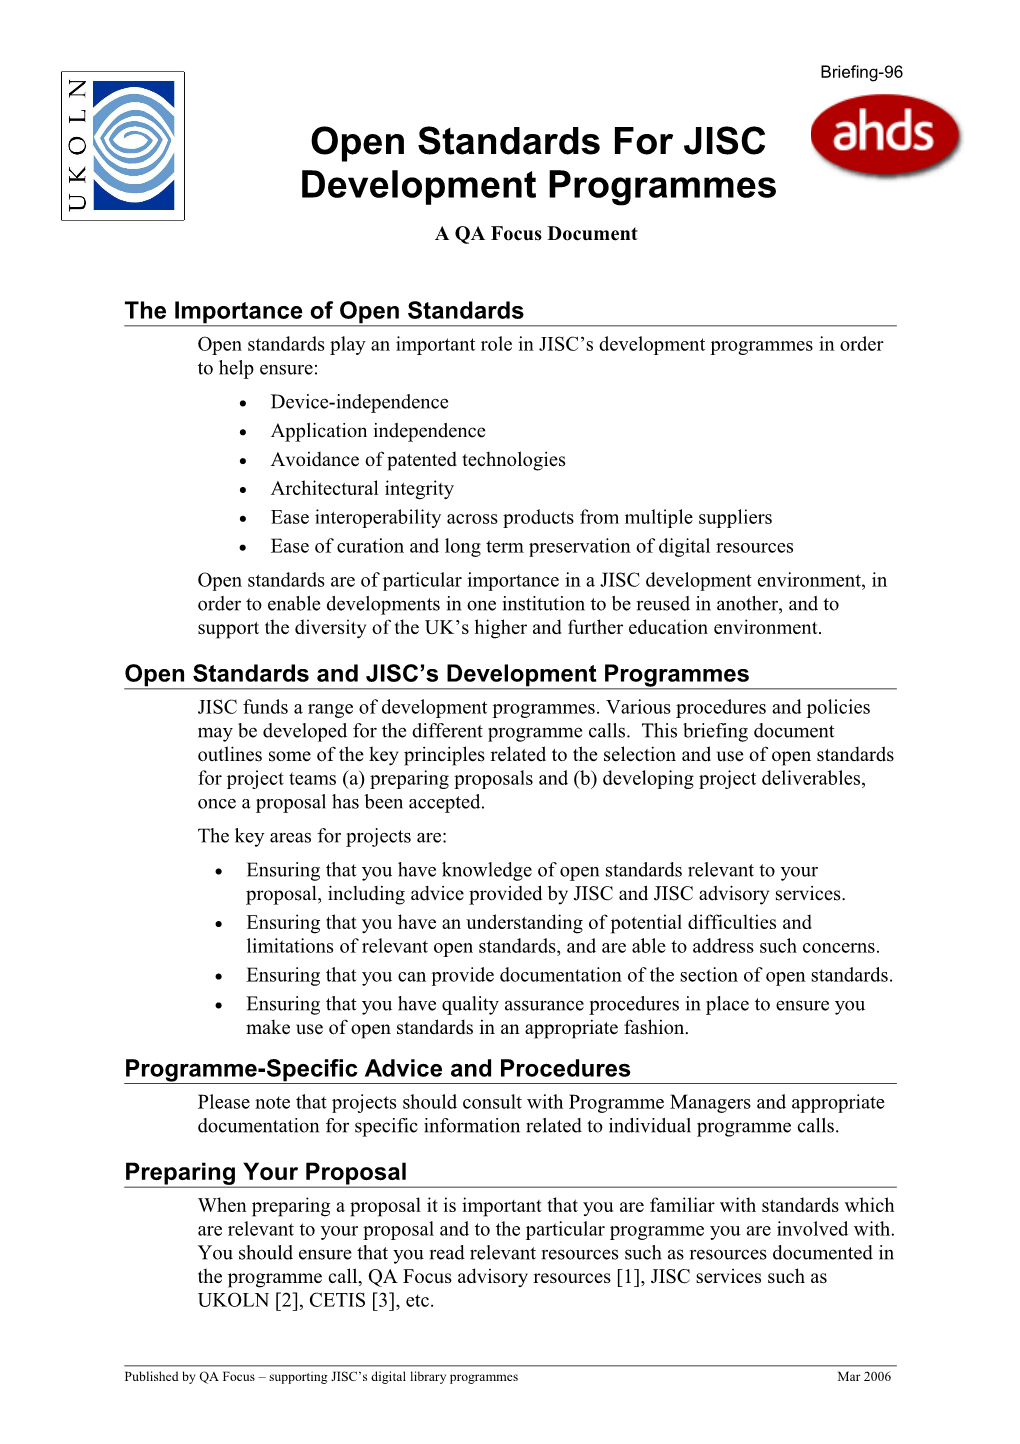 Standards for JISC Development Programmes